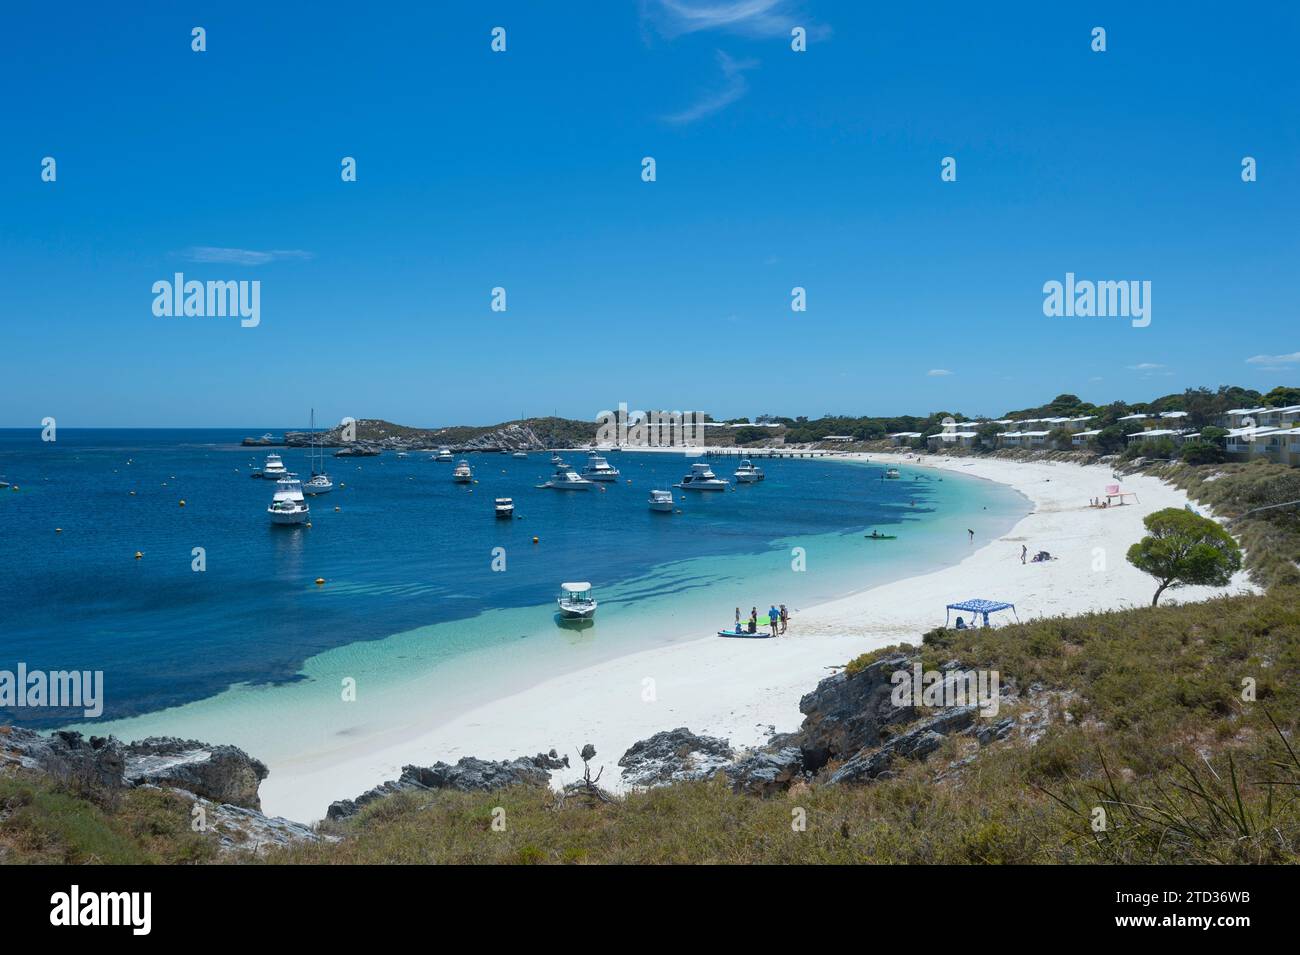 Scenic view of an idyllic white sandy beach with turquoise water on Rottnest Island or Wadjemup, Western Australia, Australia Stock Photo